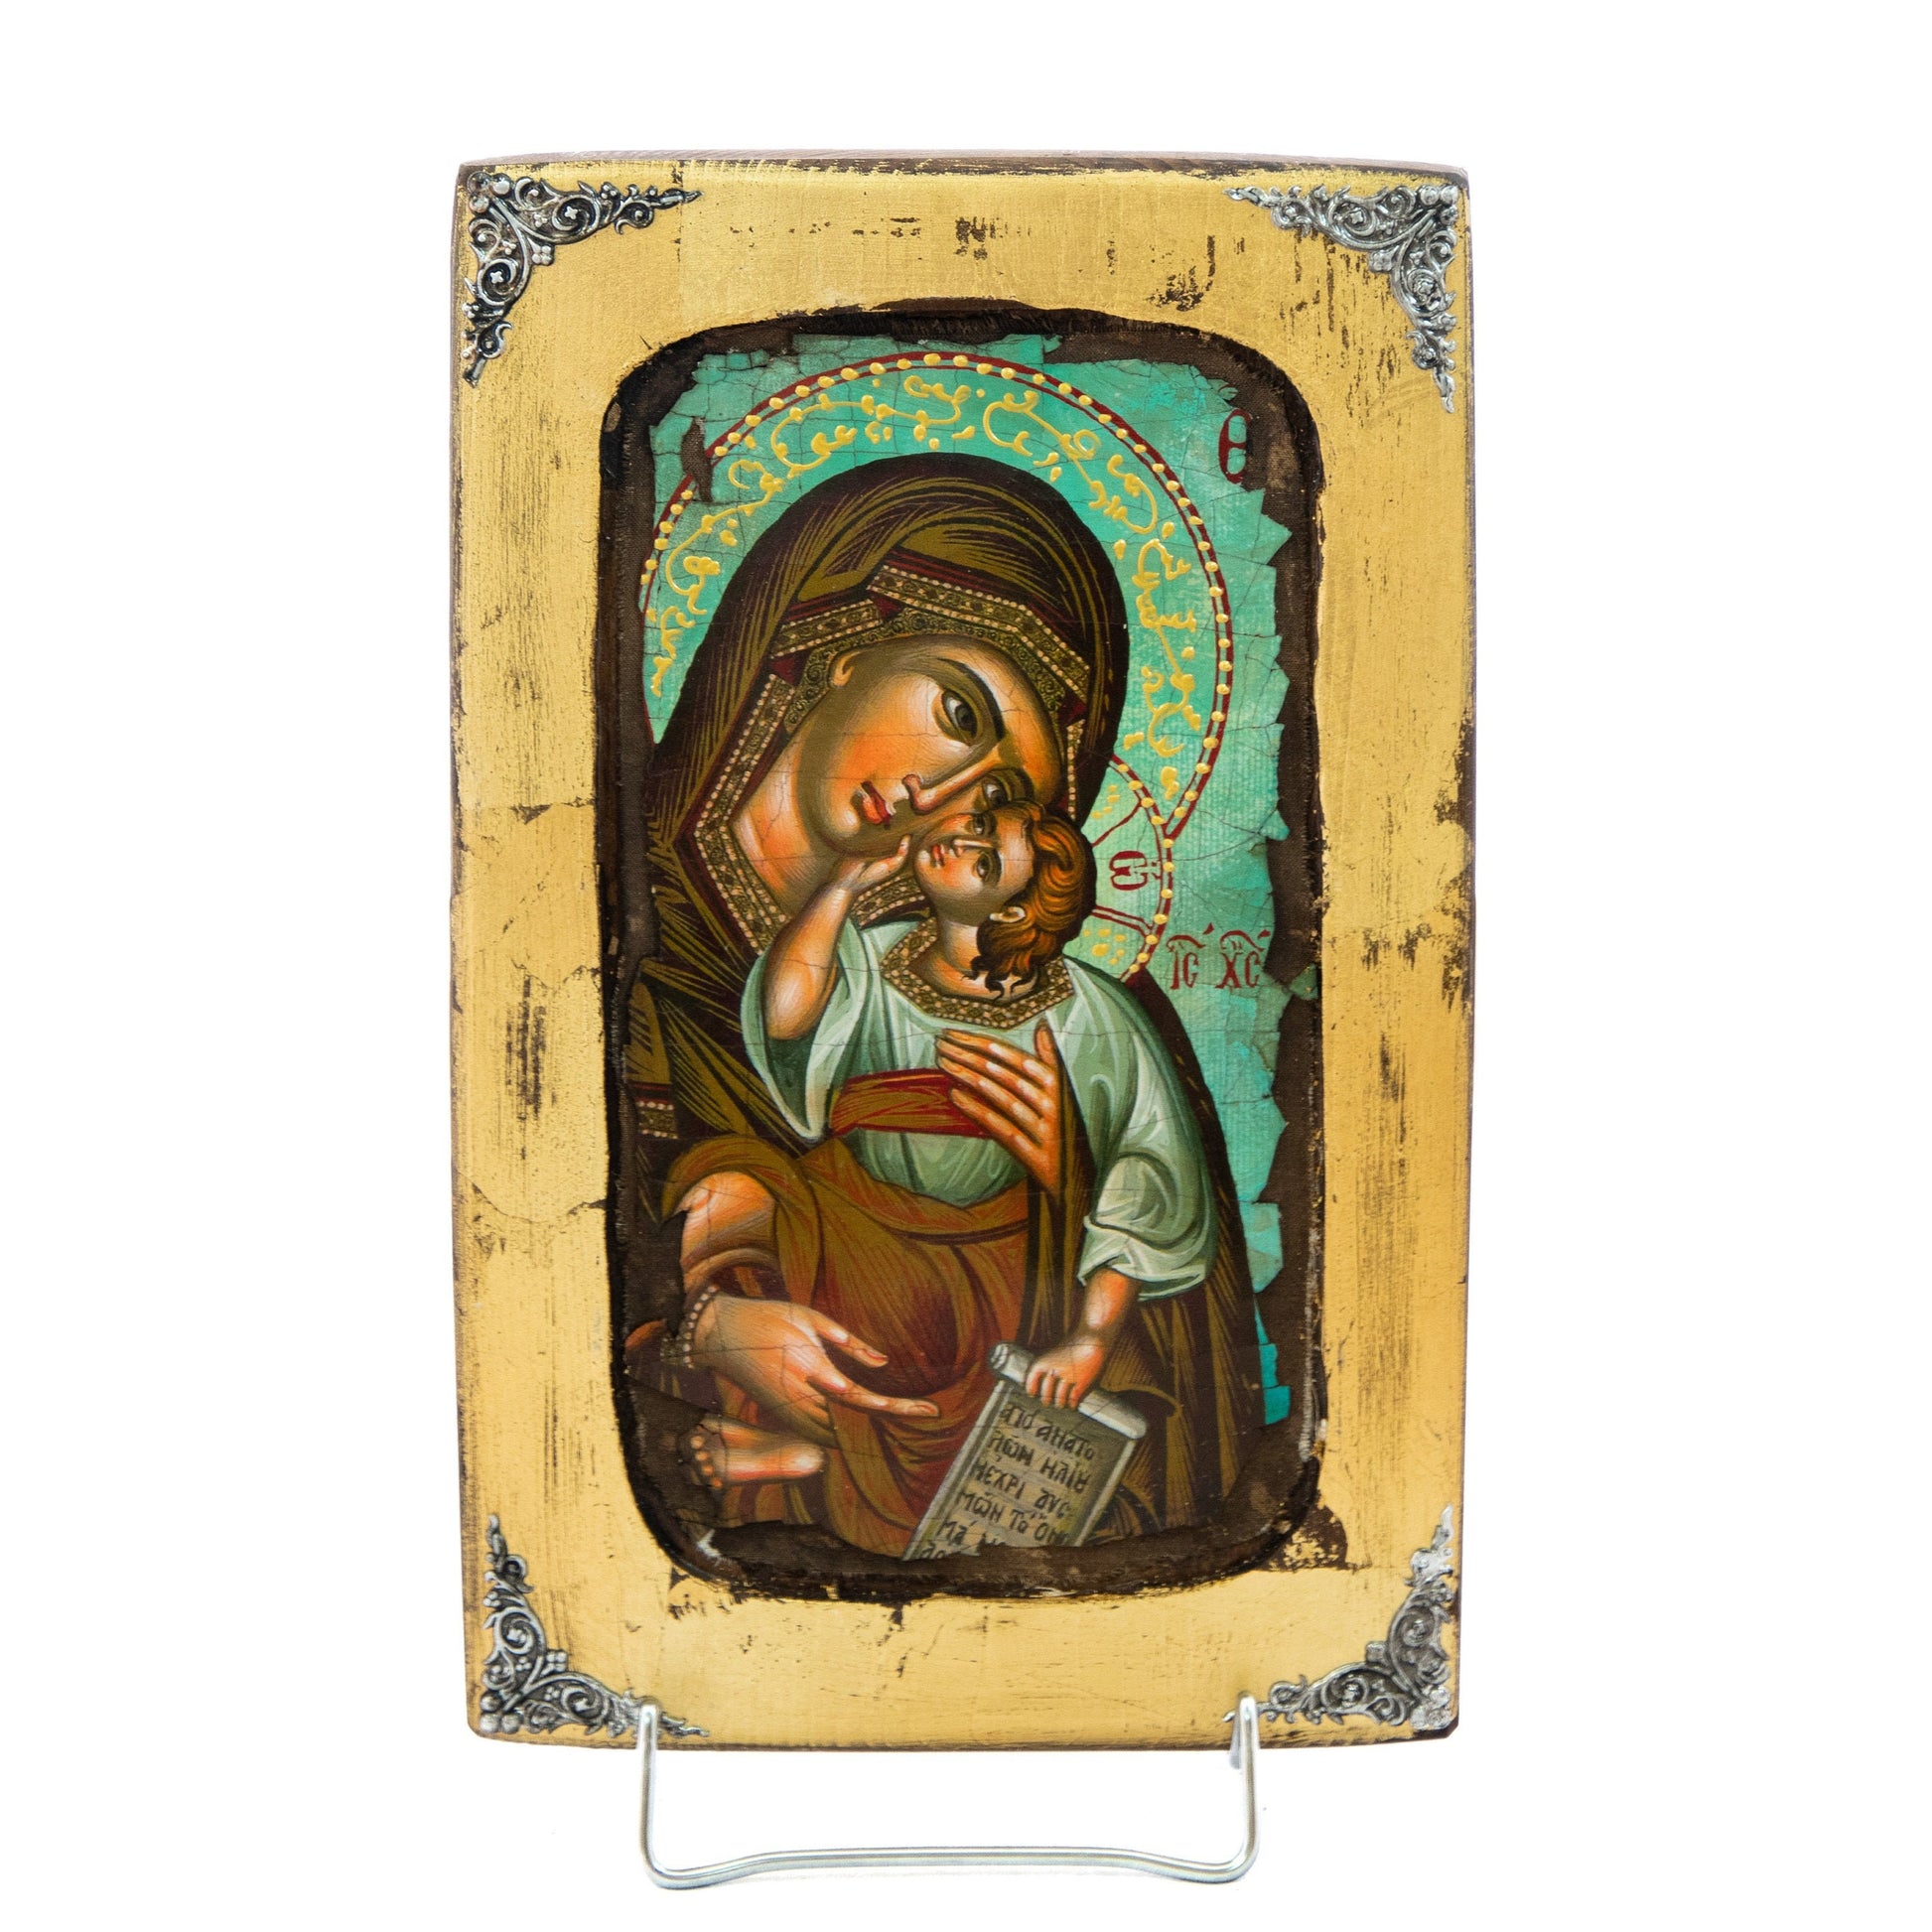 Virgin Mary icon, Handmade Greek Orthodox icon of Theotokos, Mother of God Byzantine art wall hanging canvas icon canvas w gold leaf 30x19cm TheHolyArt